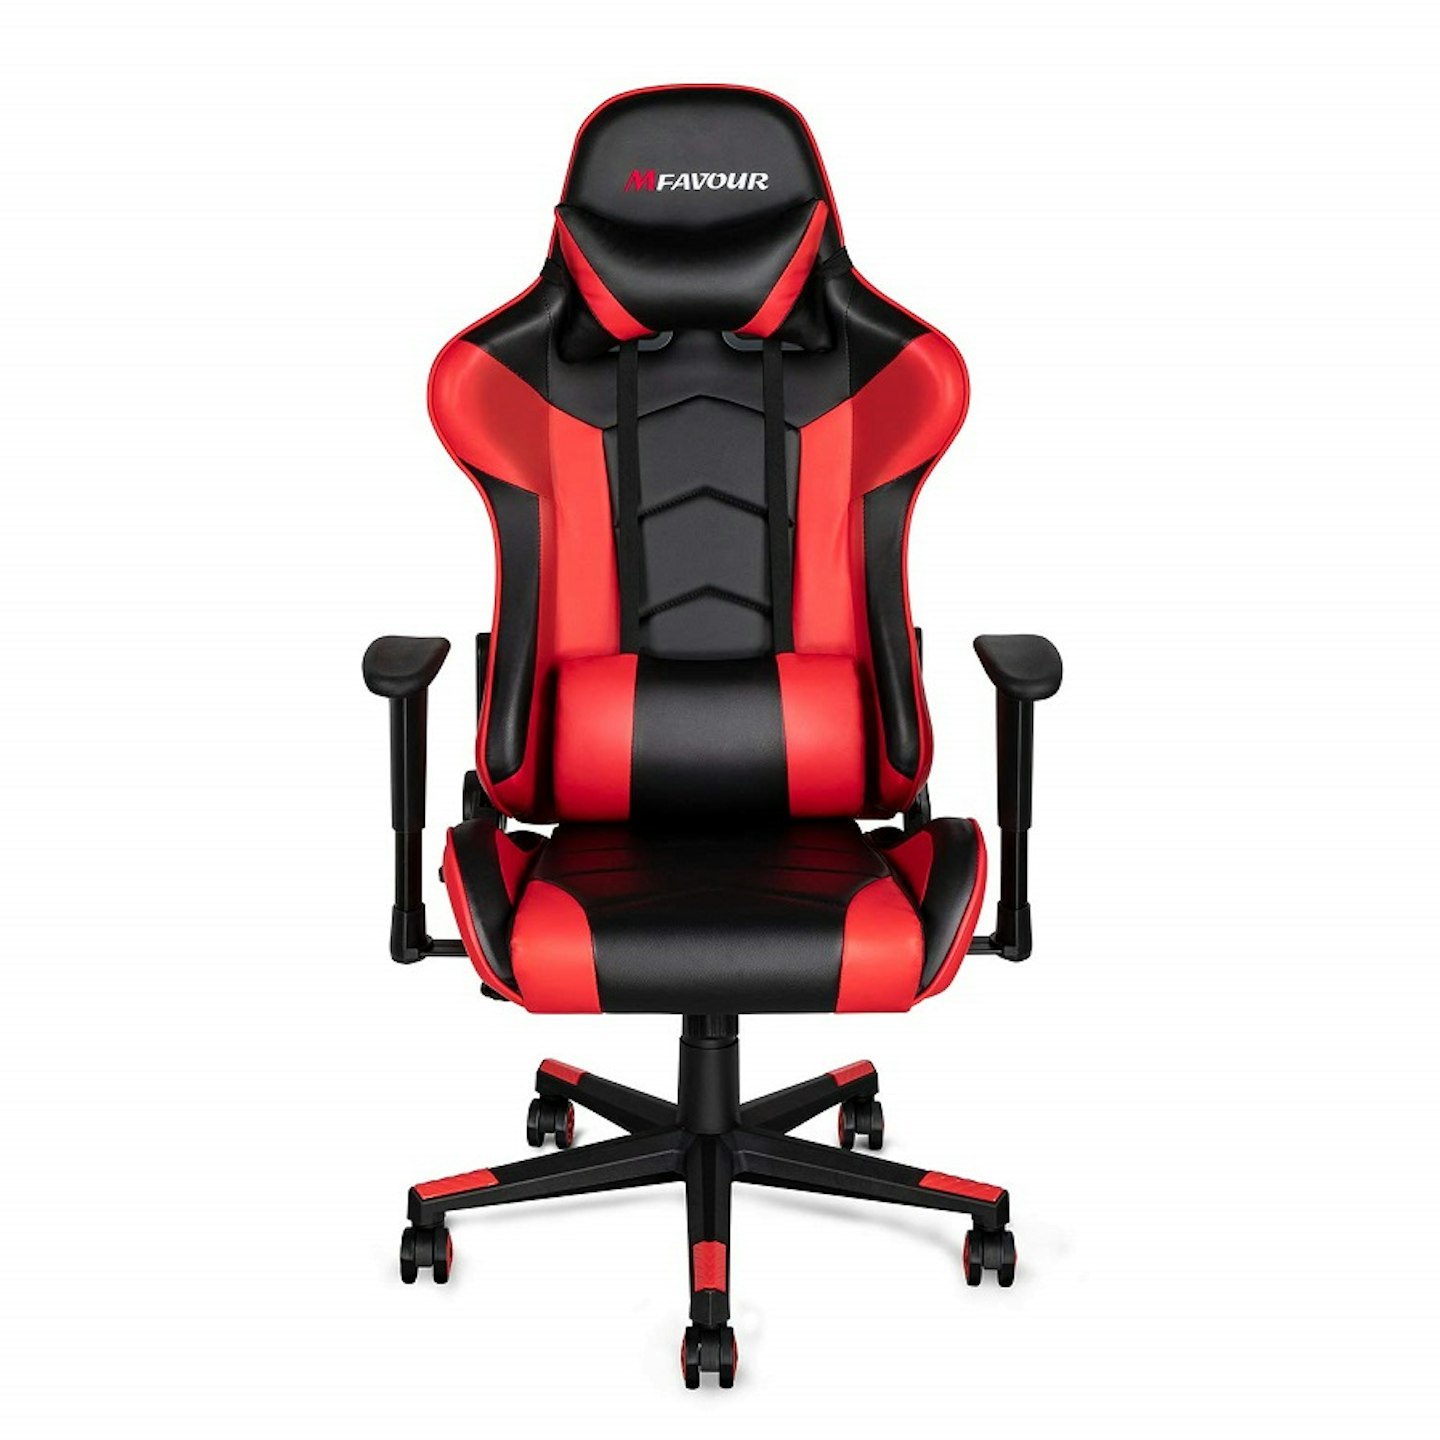 mfavour Gaming Chair, £139.99 (R.R.P £250.99)